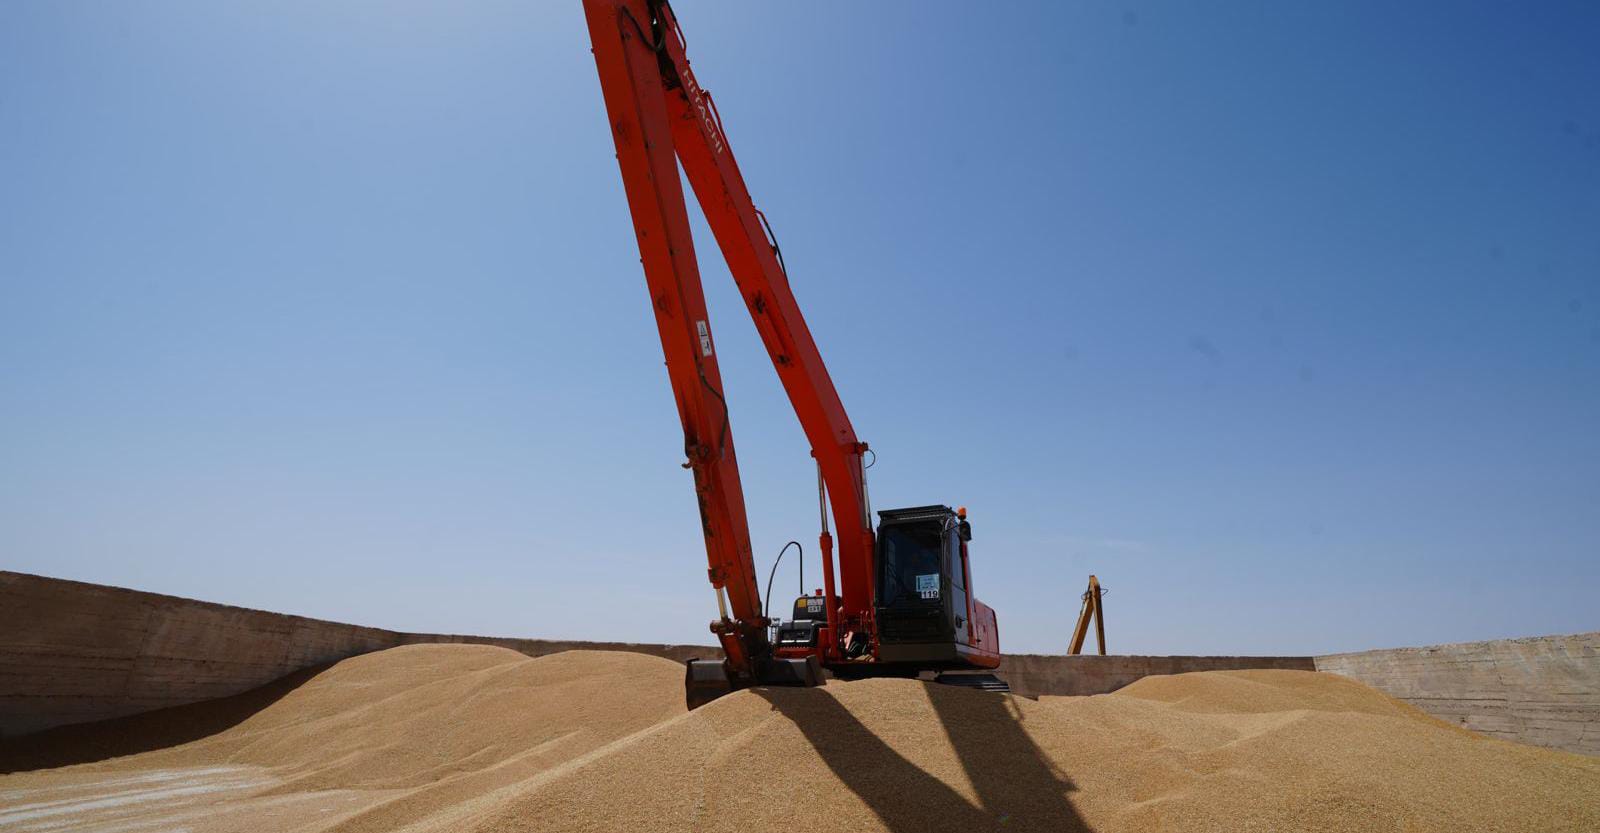 Iraq surpasses wheat self-sufficiency goal, eyes strategic stockpile build: Minister